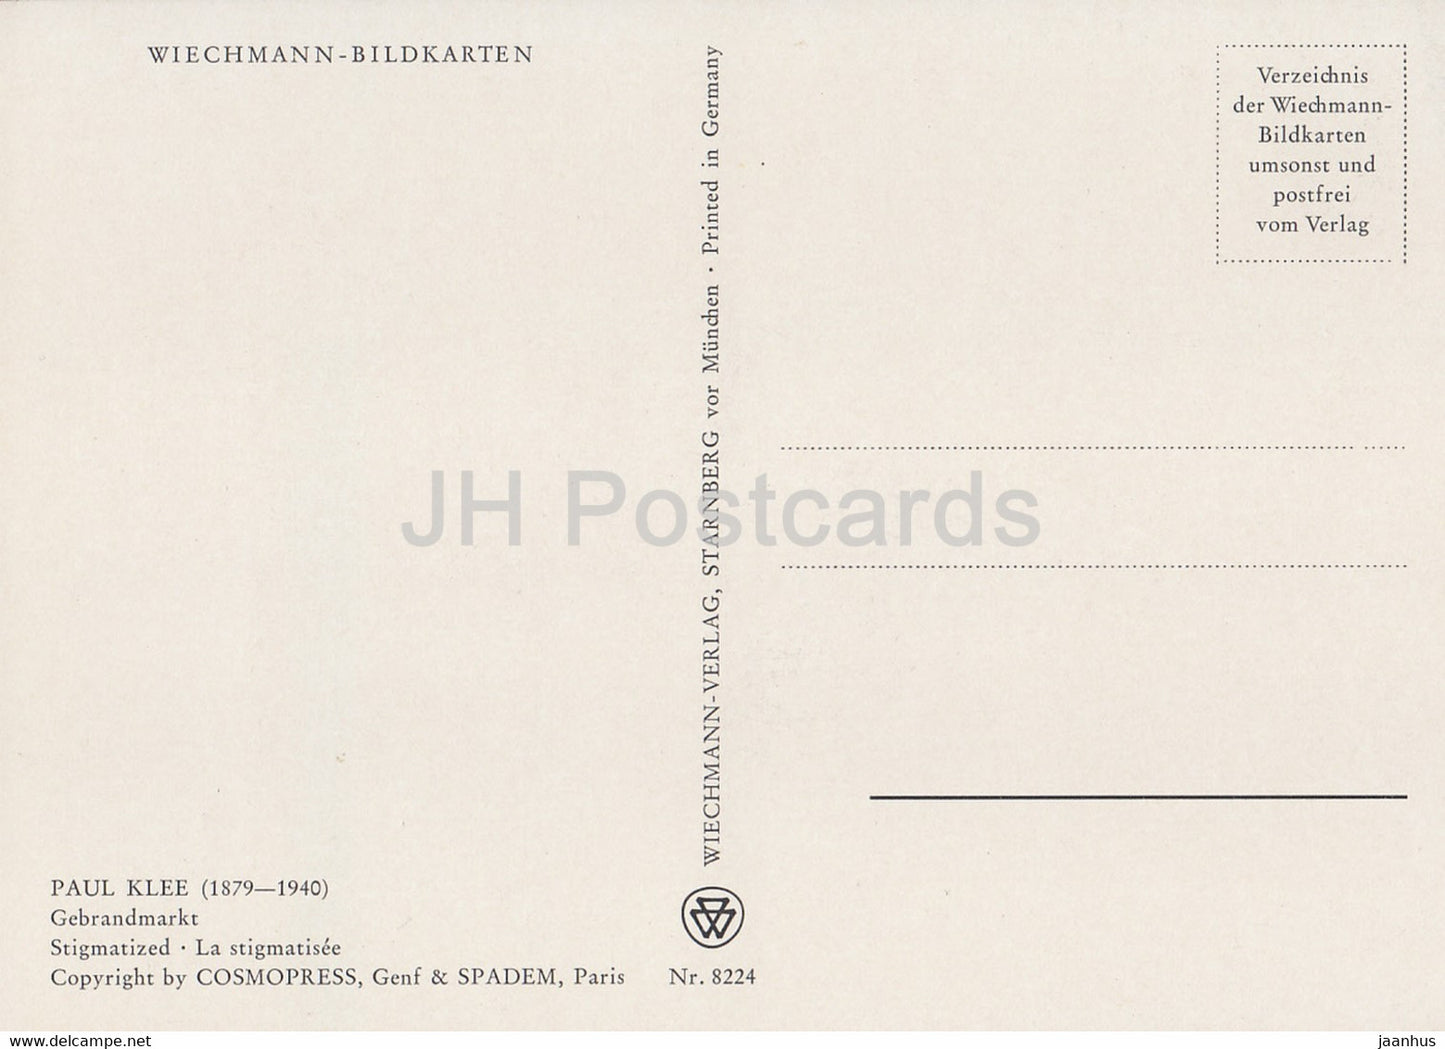 tableau de Paul Klee - Gebrandmarkt - Stigmatisé - 8224 - Art allemand - Allemagne - inutilisé